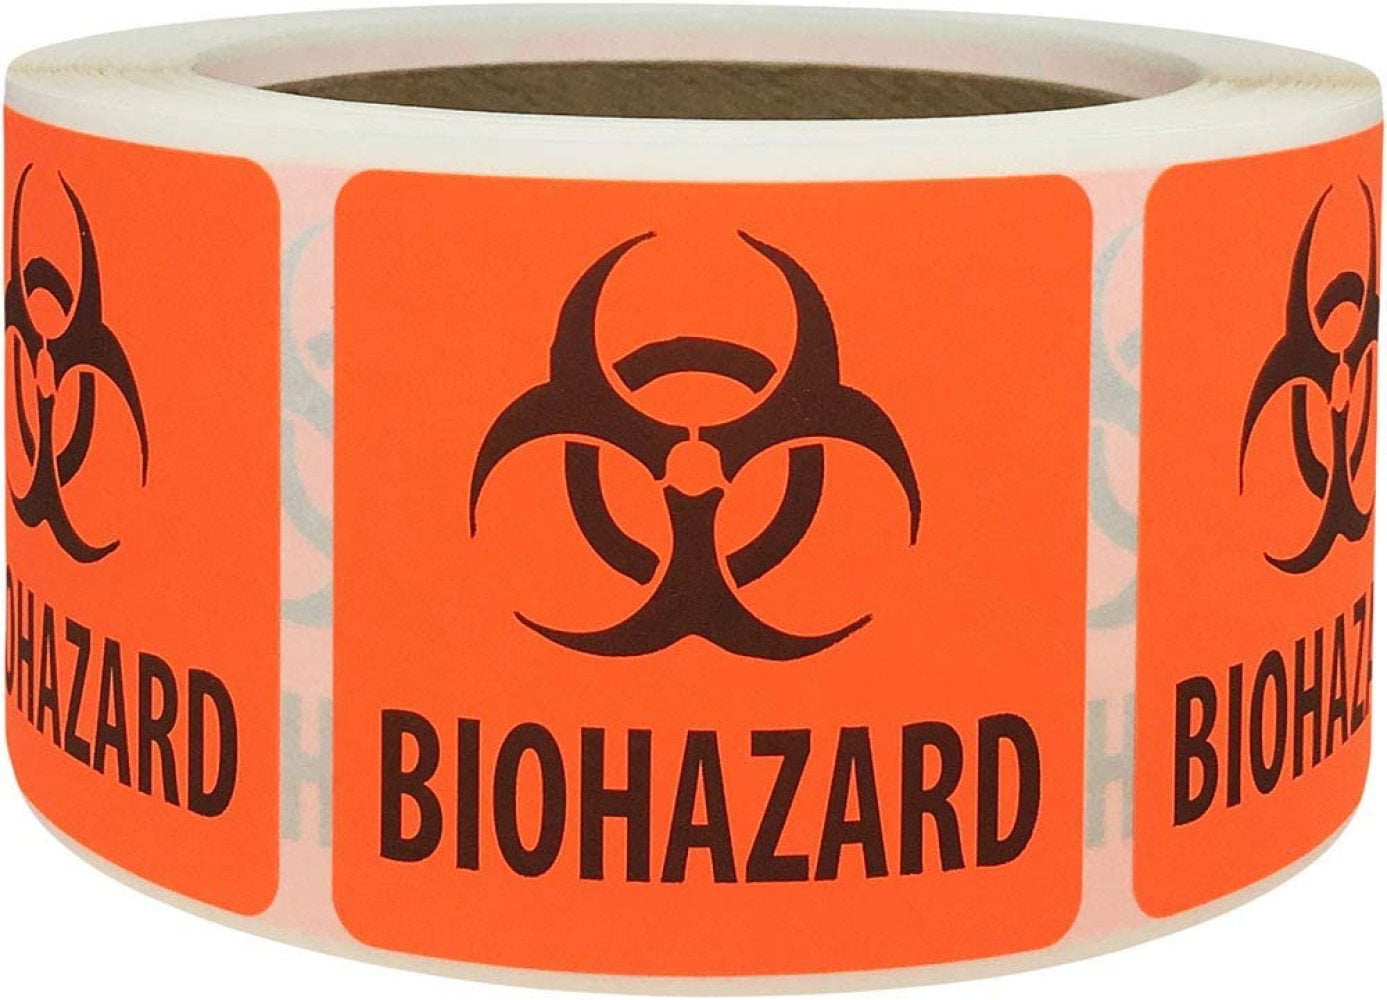 ChromaLabel 4 x 4 inch Fluorescent Red-Orange Biohazard Warning Stickers 250/Roll 